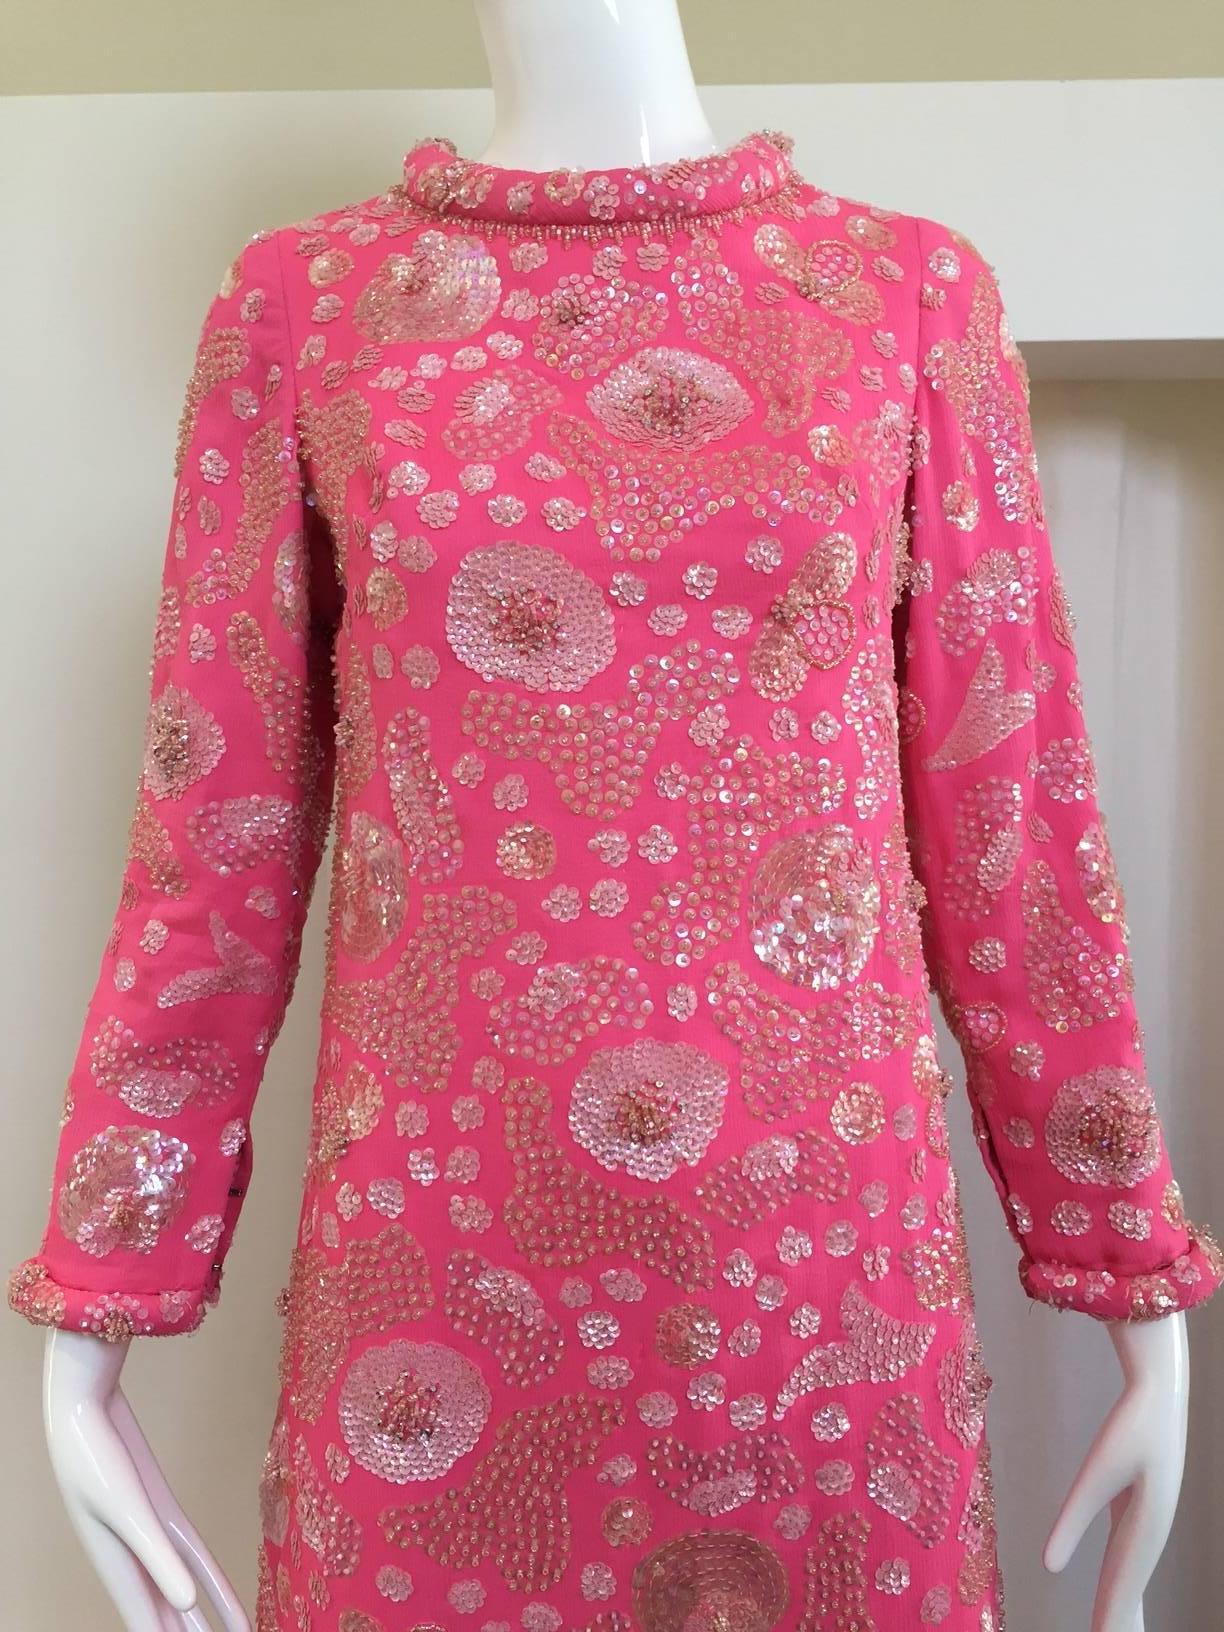 Vintage 1960s Buble gum Pink Jackie O silk beaded shift gown embellished white iridescent clear sequins.
Shoulder: 13